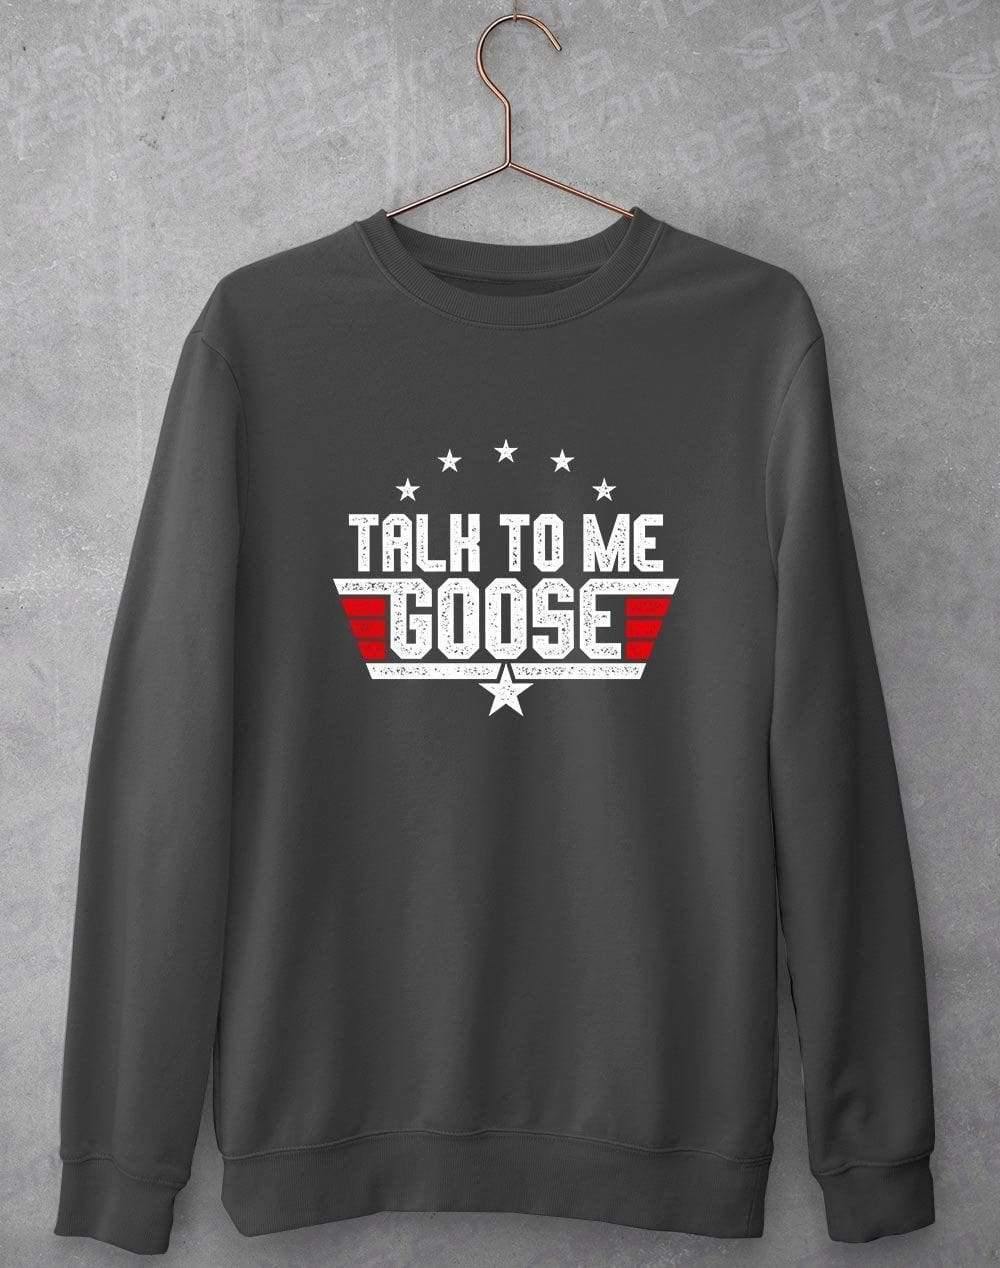 Talk to me Goose Sweatshirt S / Charcoal  - Off World Tees